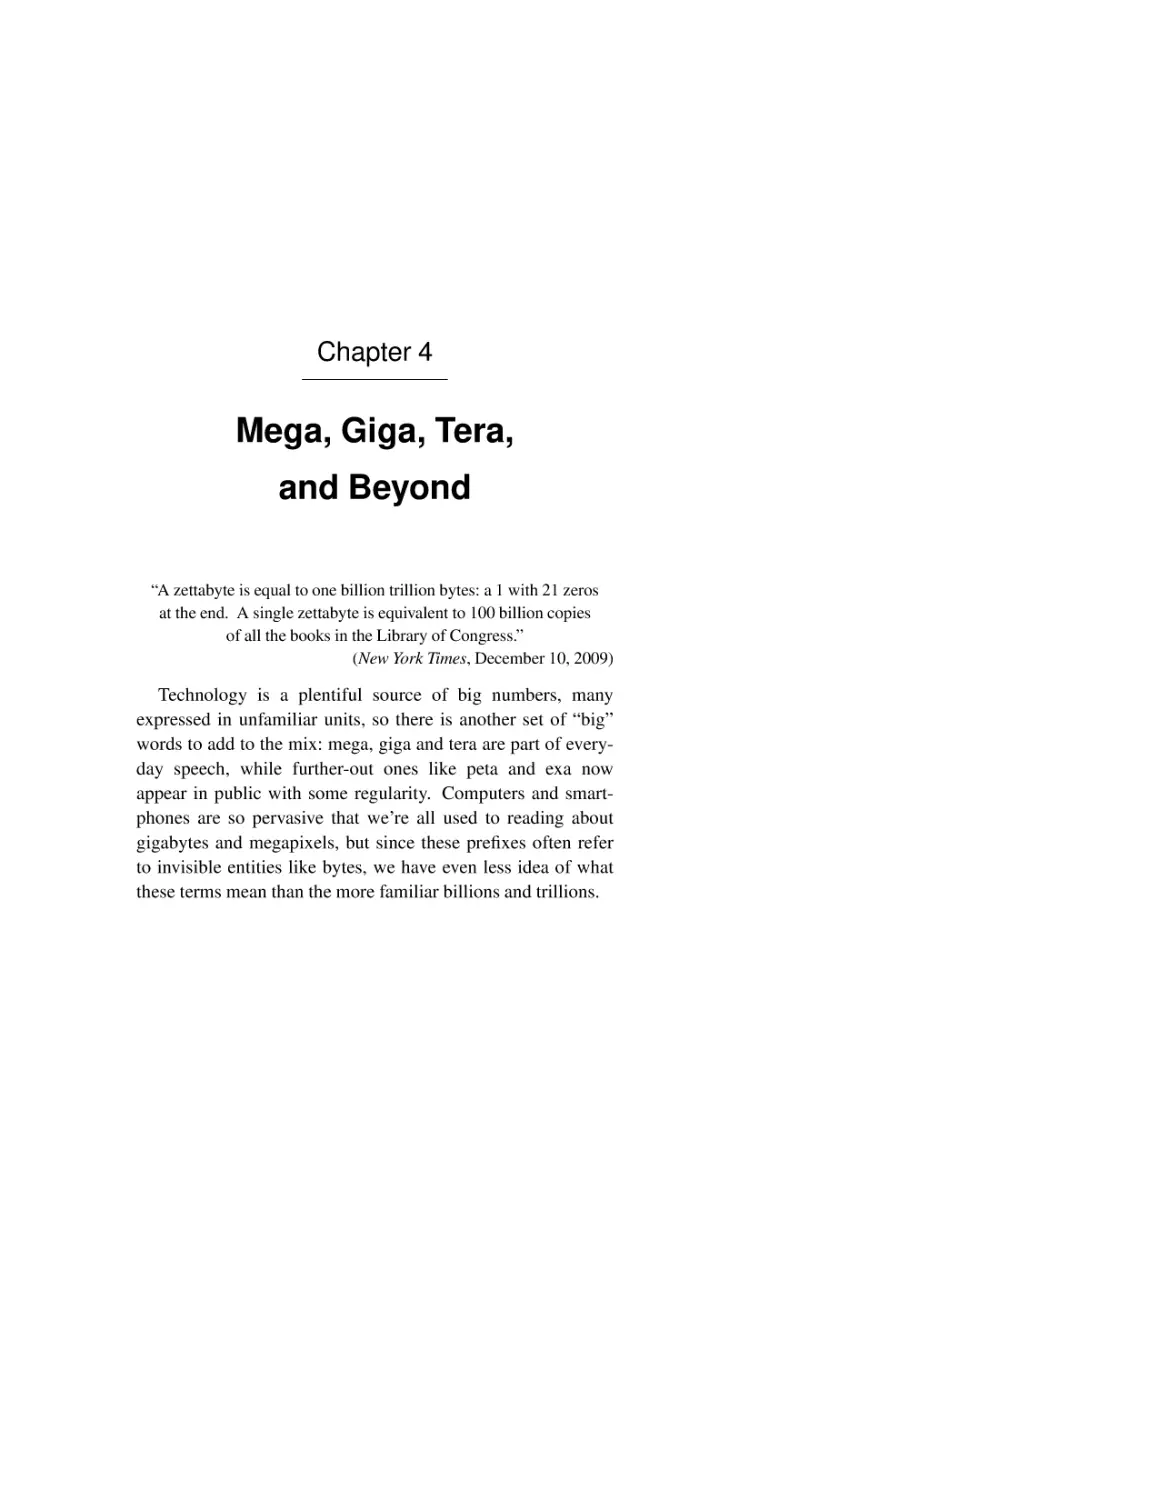 4 Mega, Giga, Tera, and Beyond